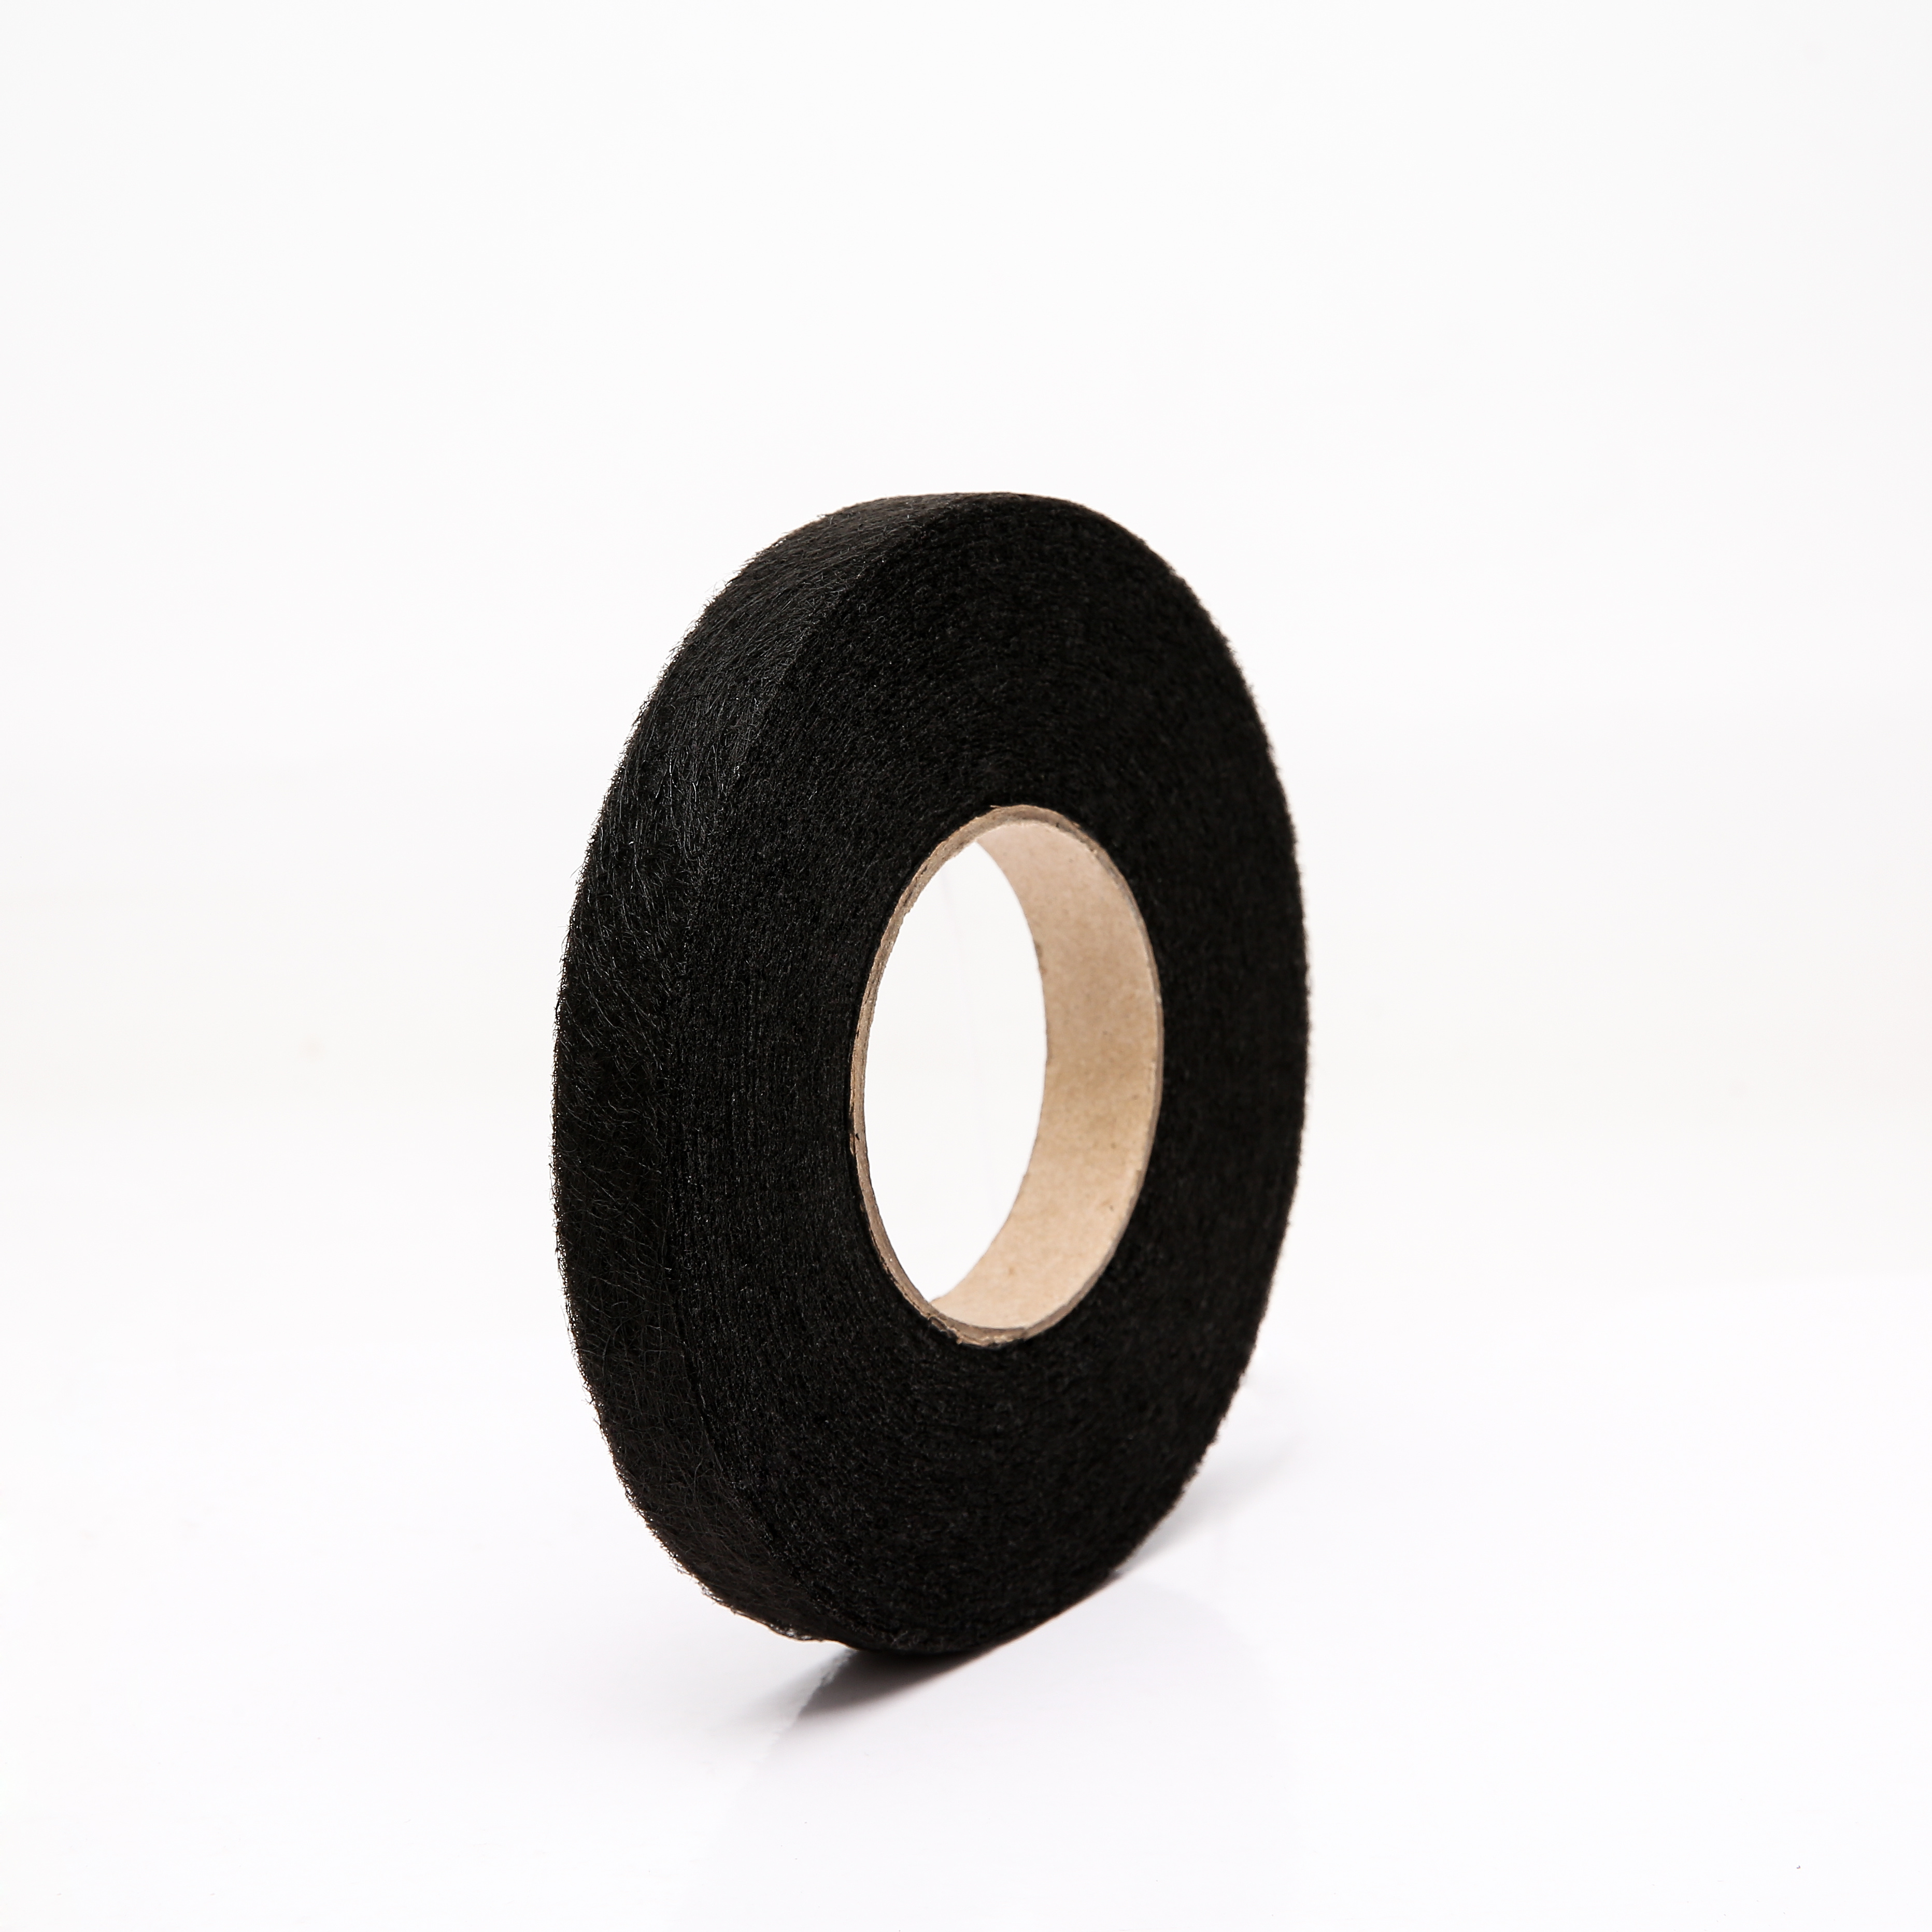  joaoxoko Hem Tape,2 Rolls No Need to Sew Hemming Tape-On Fabric  Fusing Tape for Hemming Clothes Jeans Dresses Pants, 140 YardsHemmingTape  for Pants (Black + White) (140Yards) : Arts, Crafts 